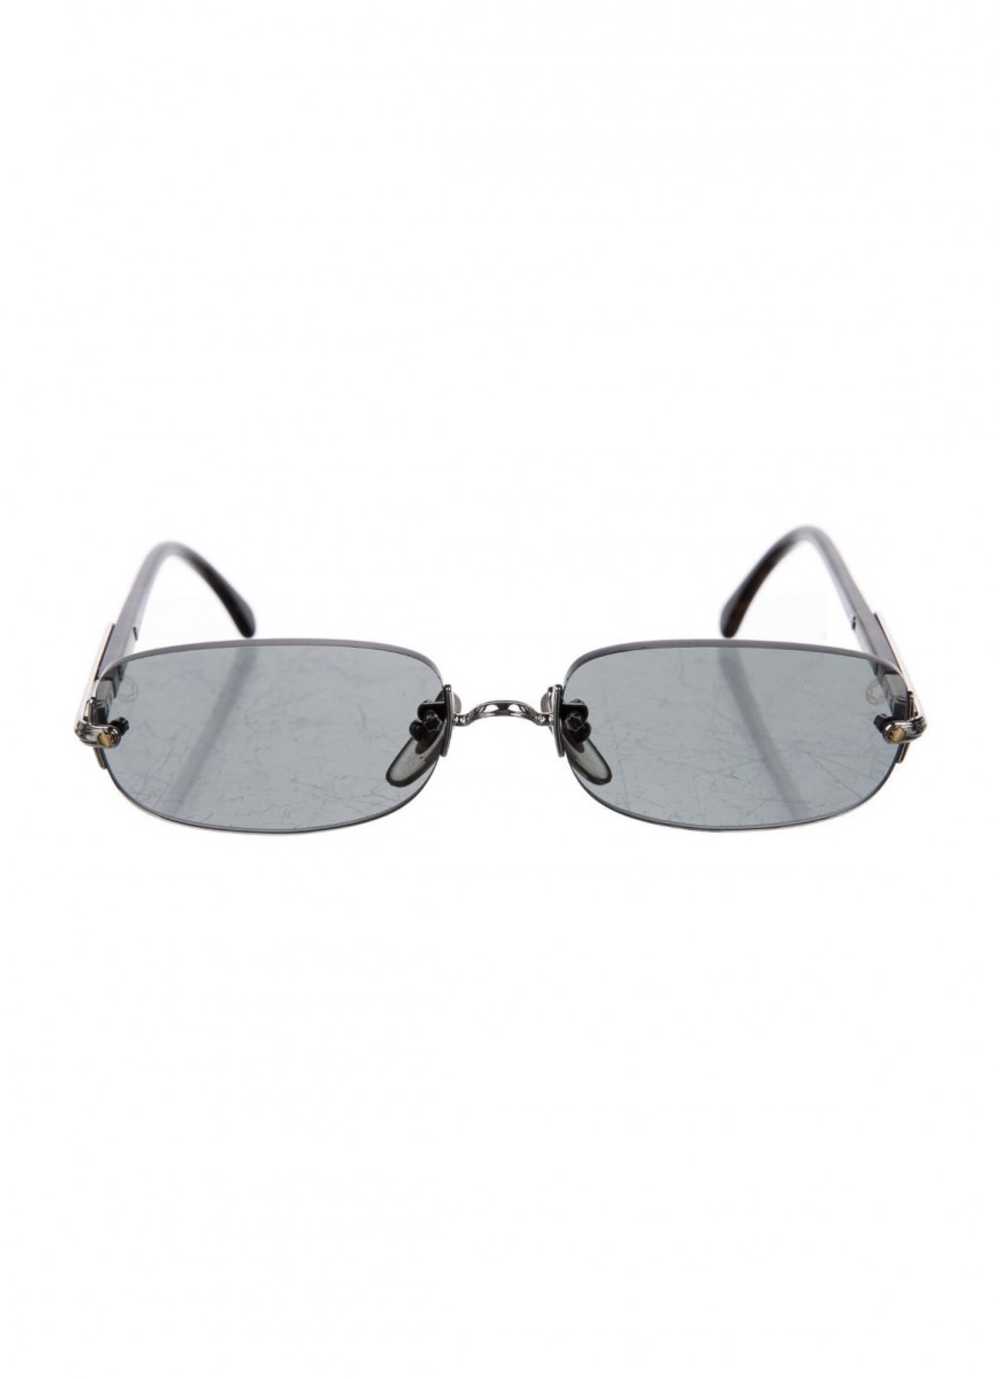 Montblanc Square Sunglasses - Tinted - image 3